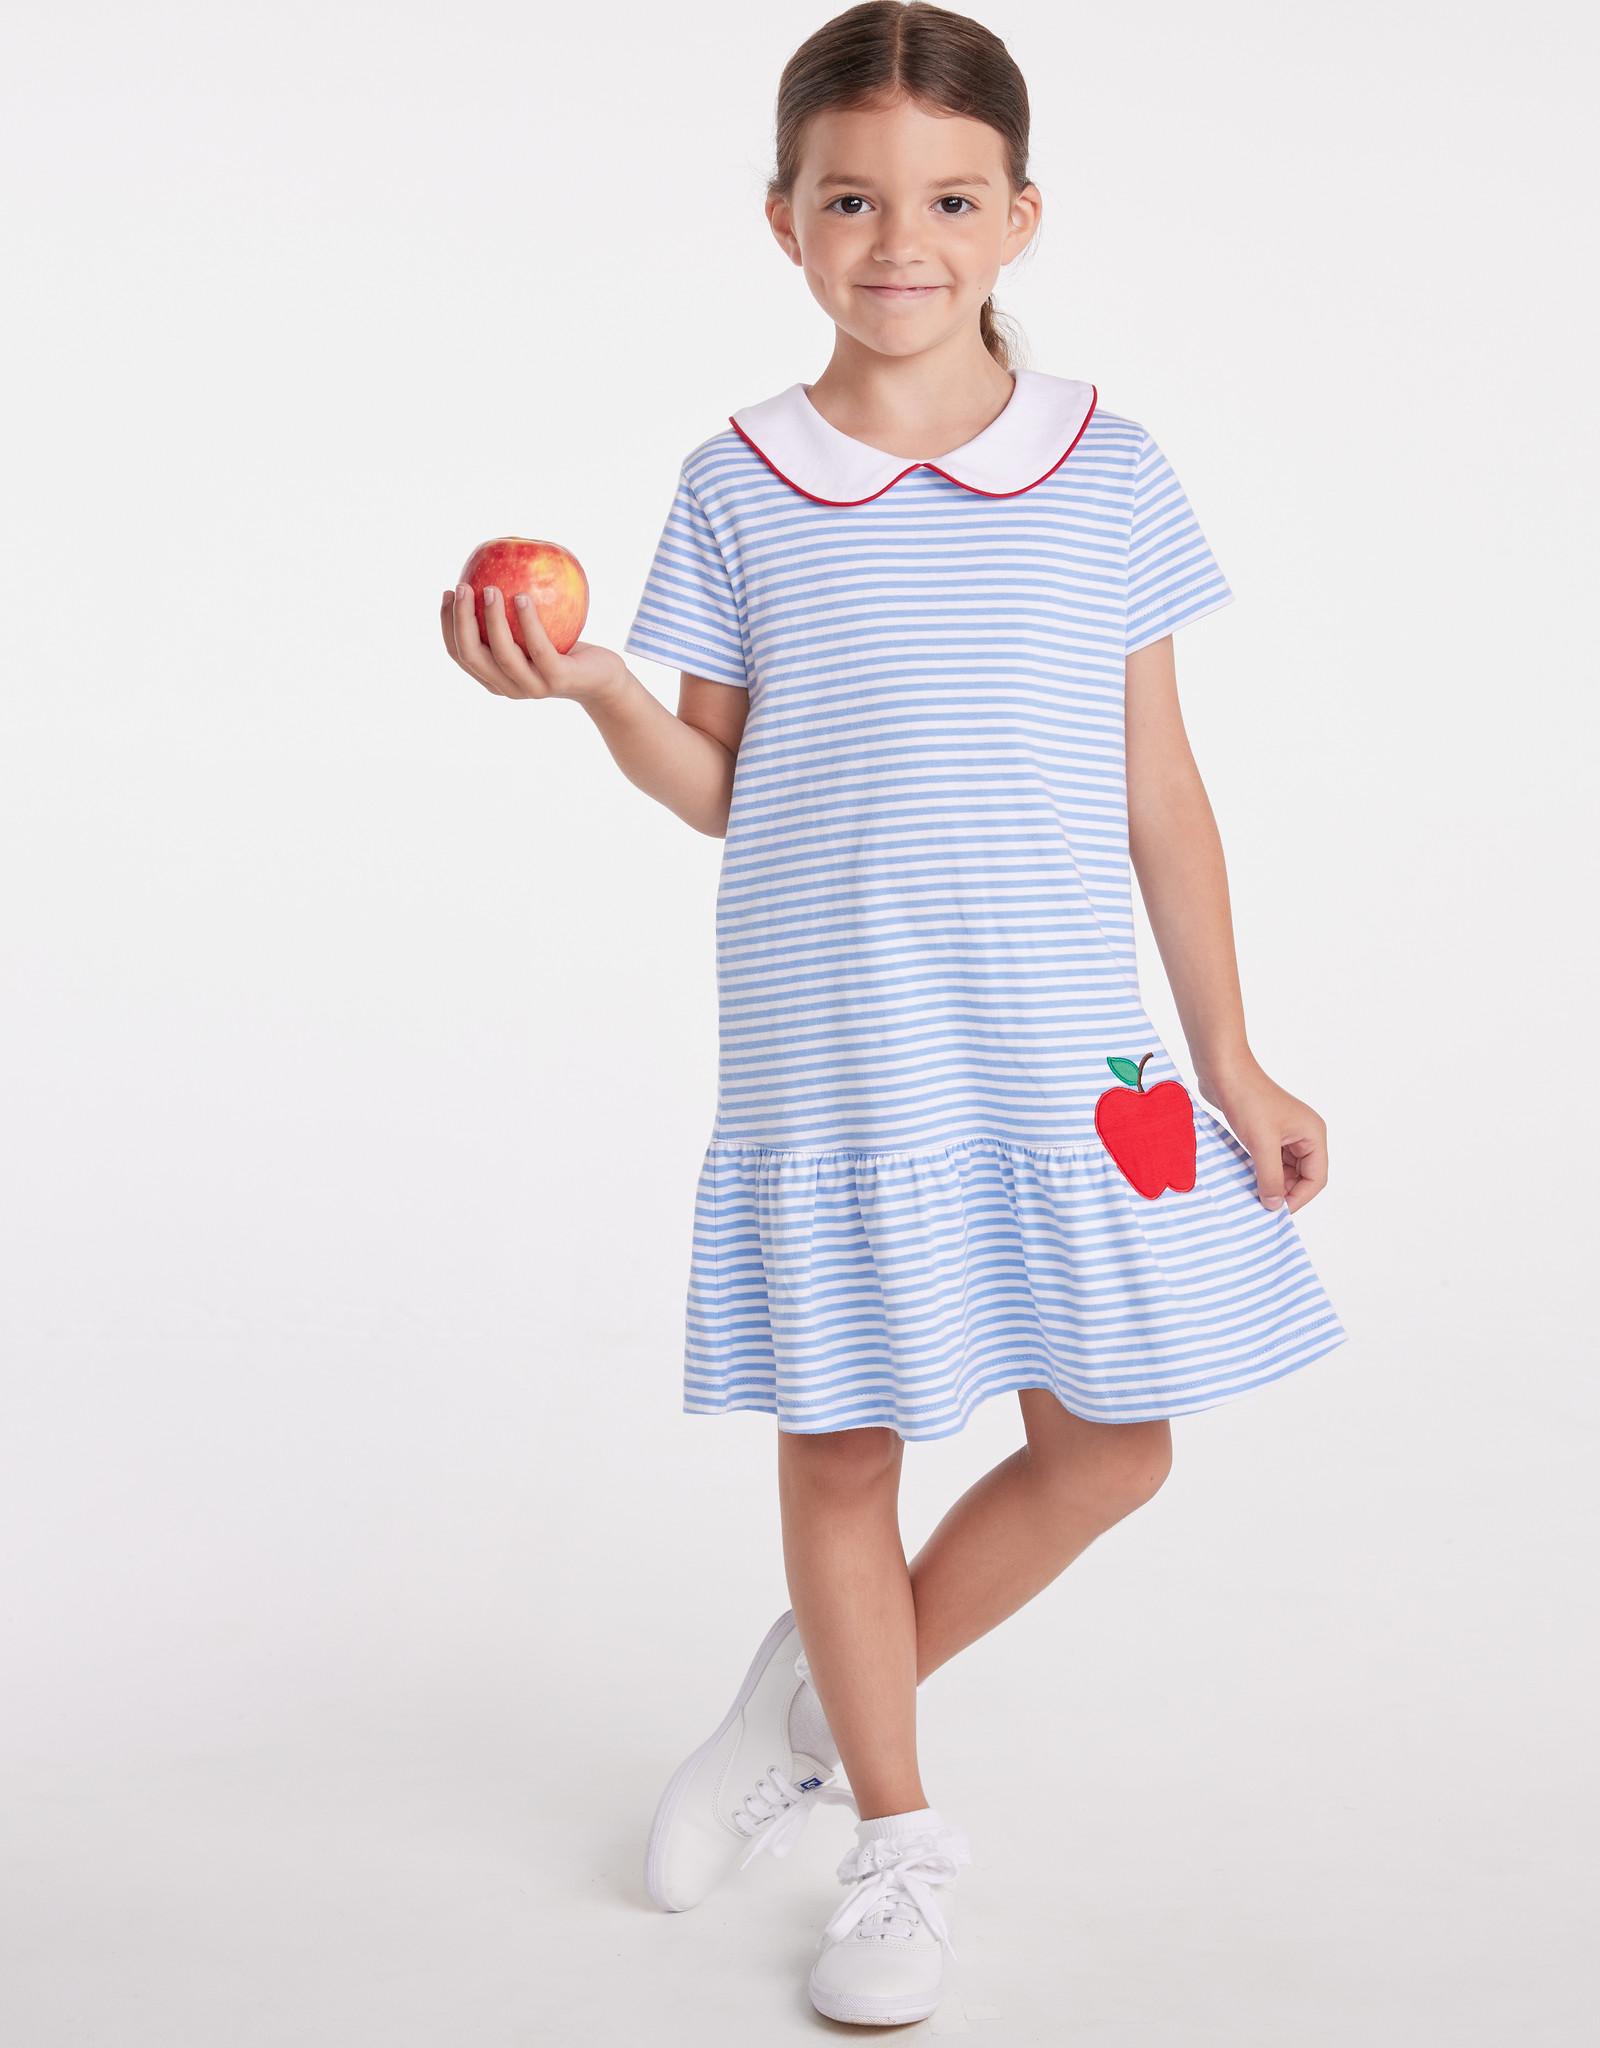 Little English Applique Chanel Dress - Apple